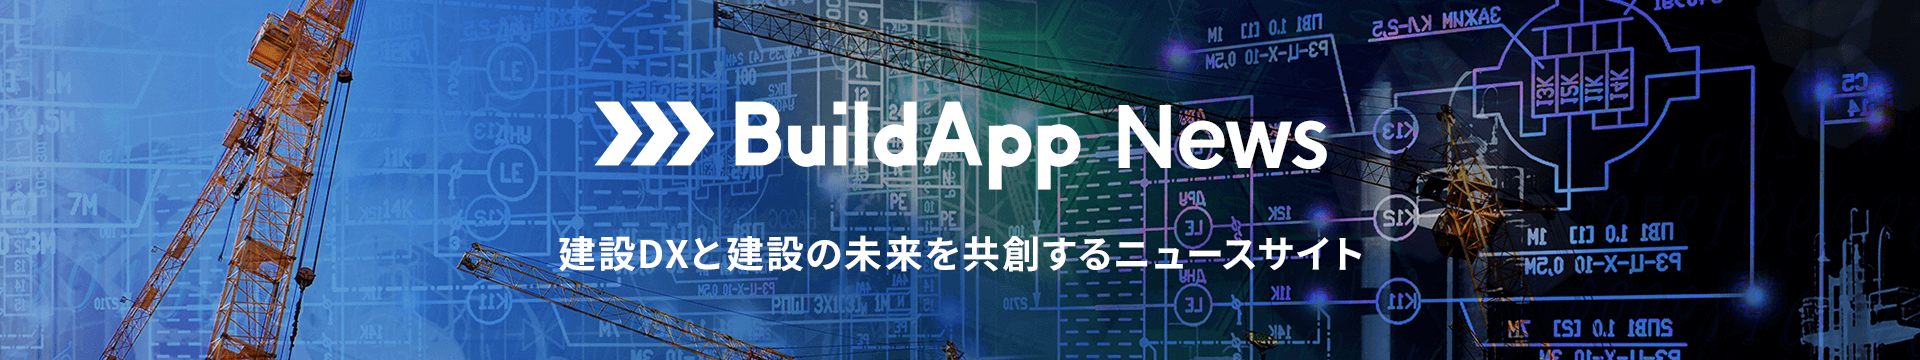 BuildApp News